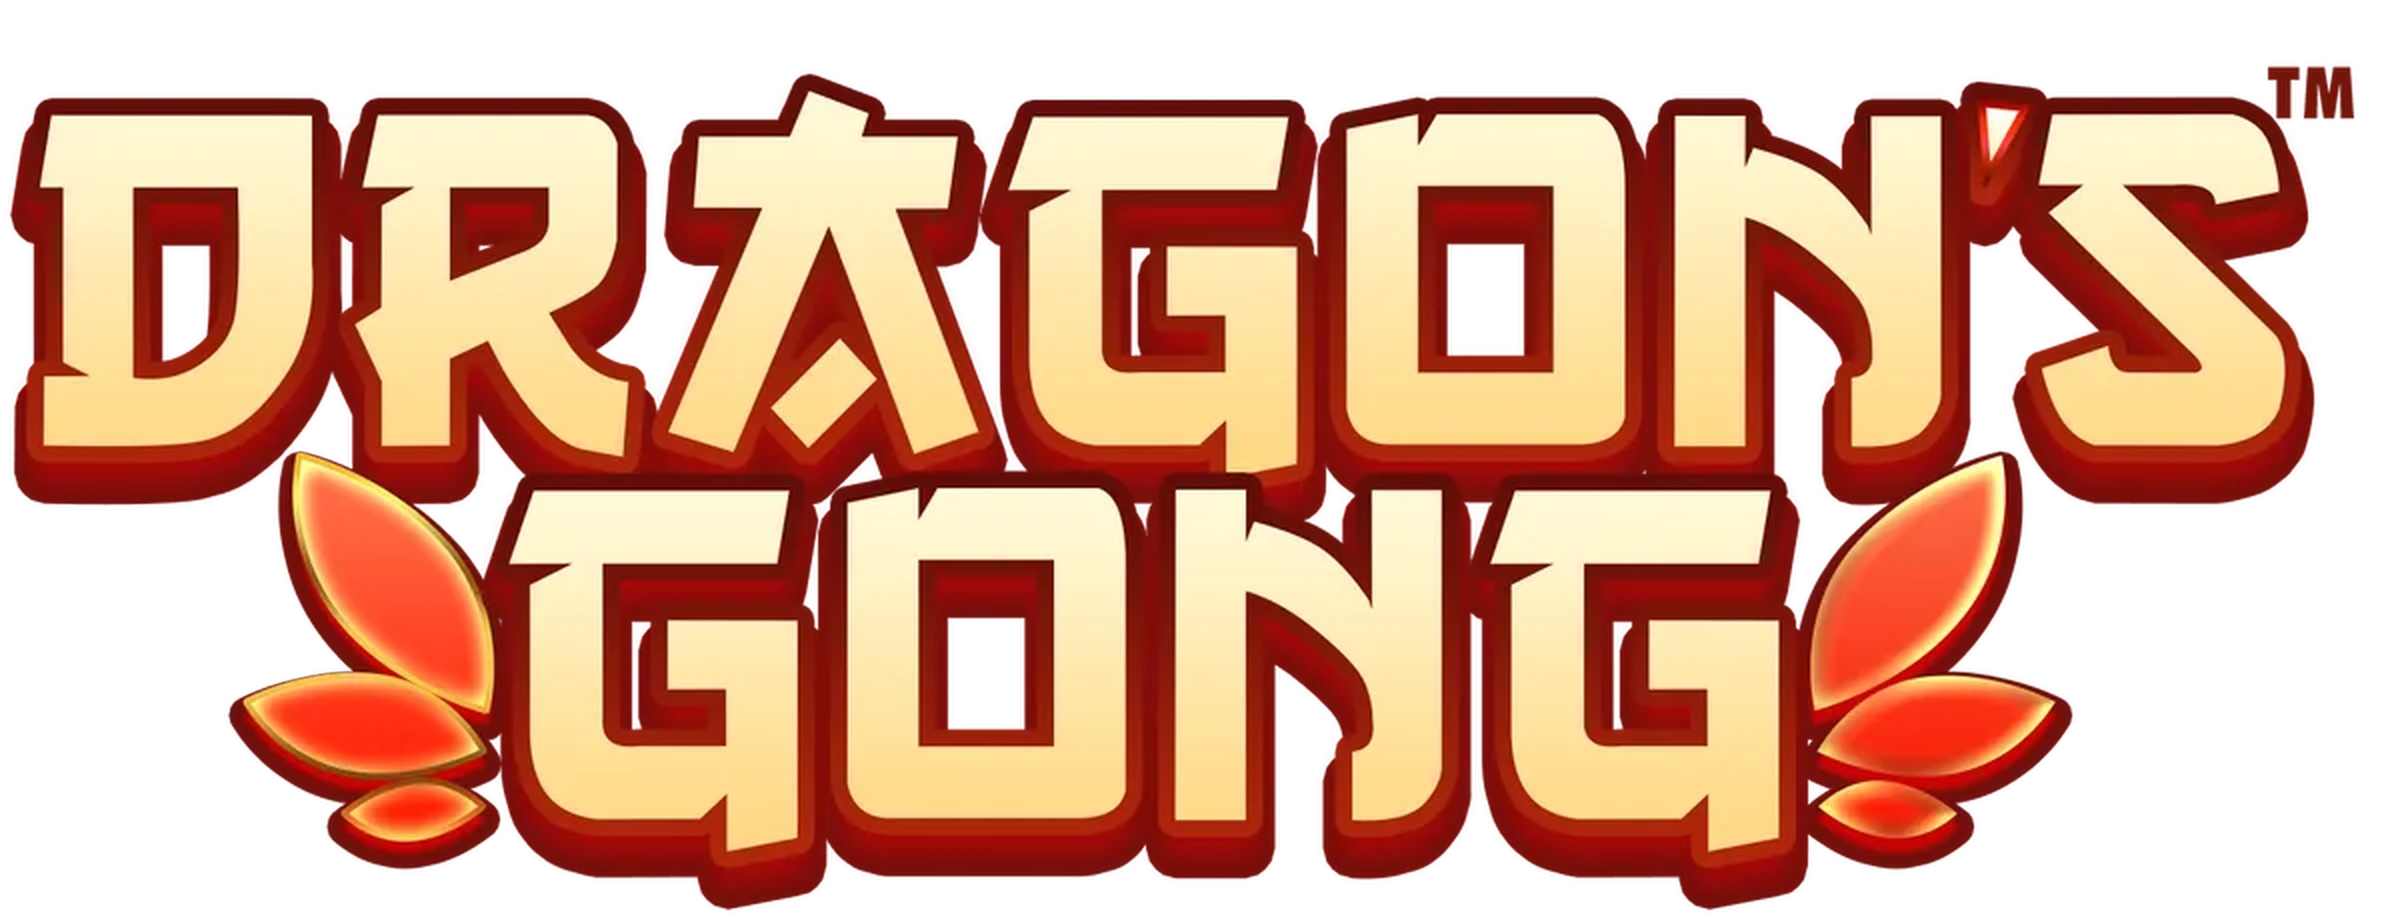 Dragon Dozer demo